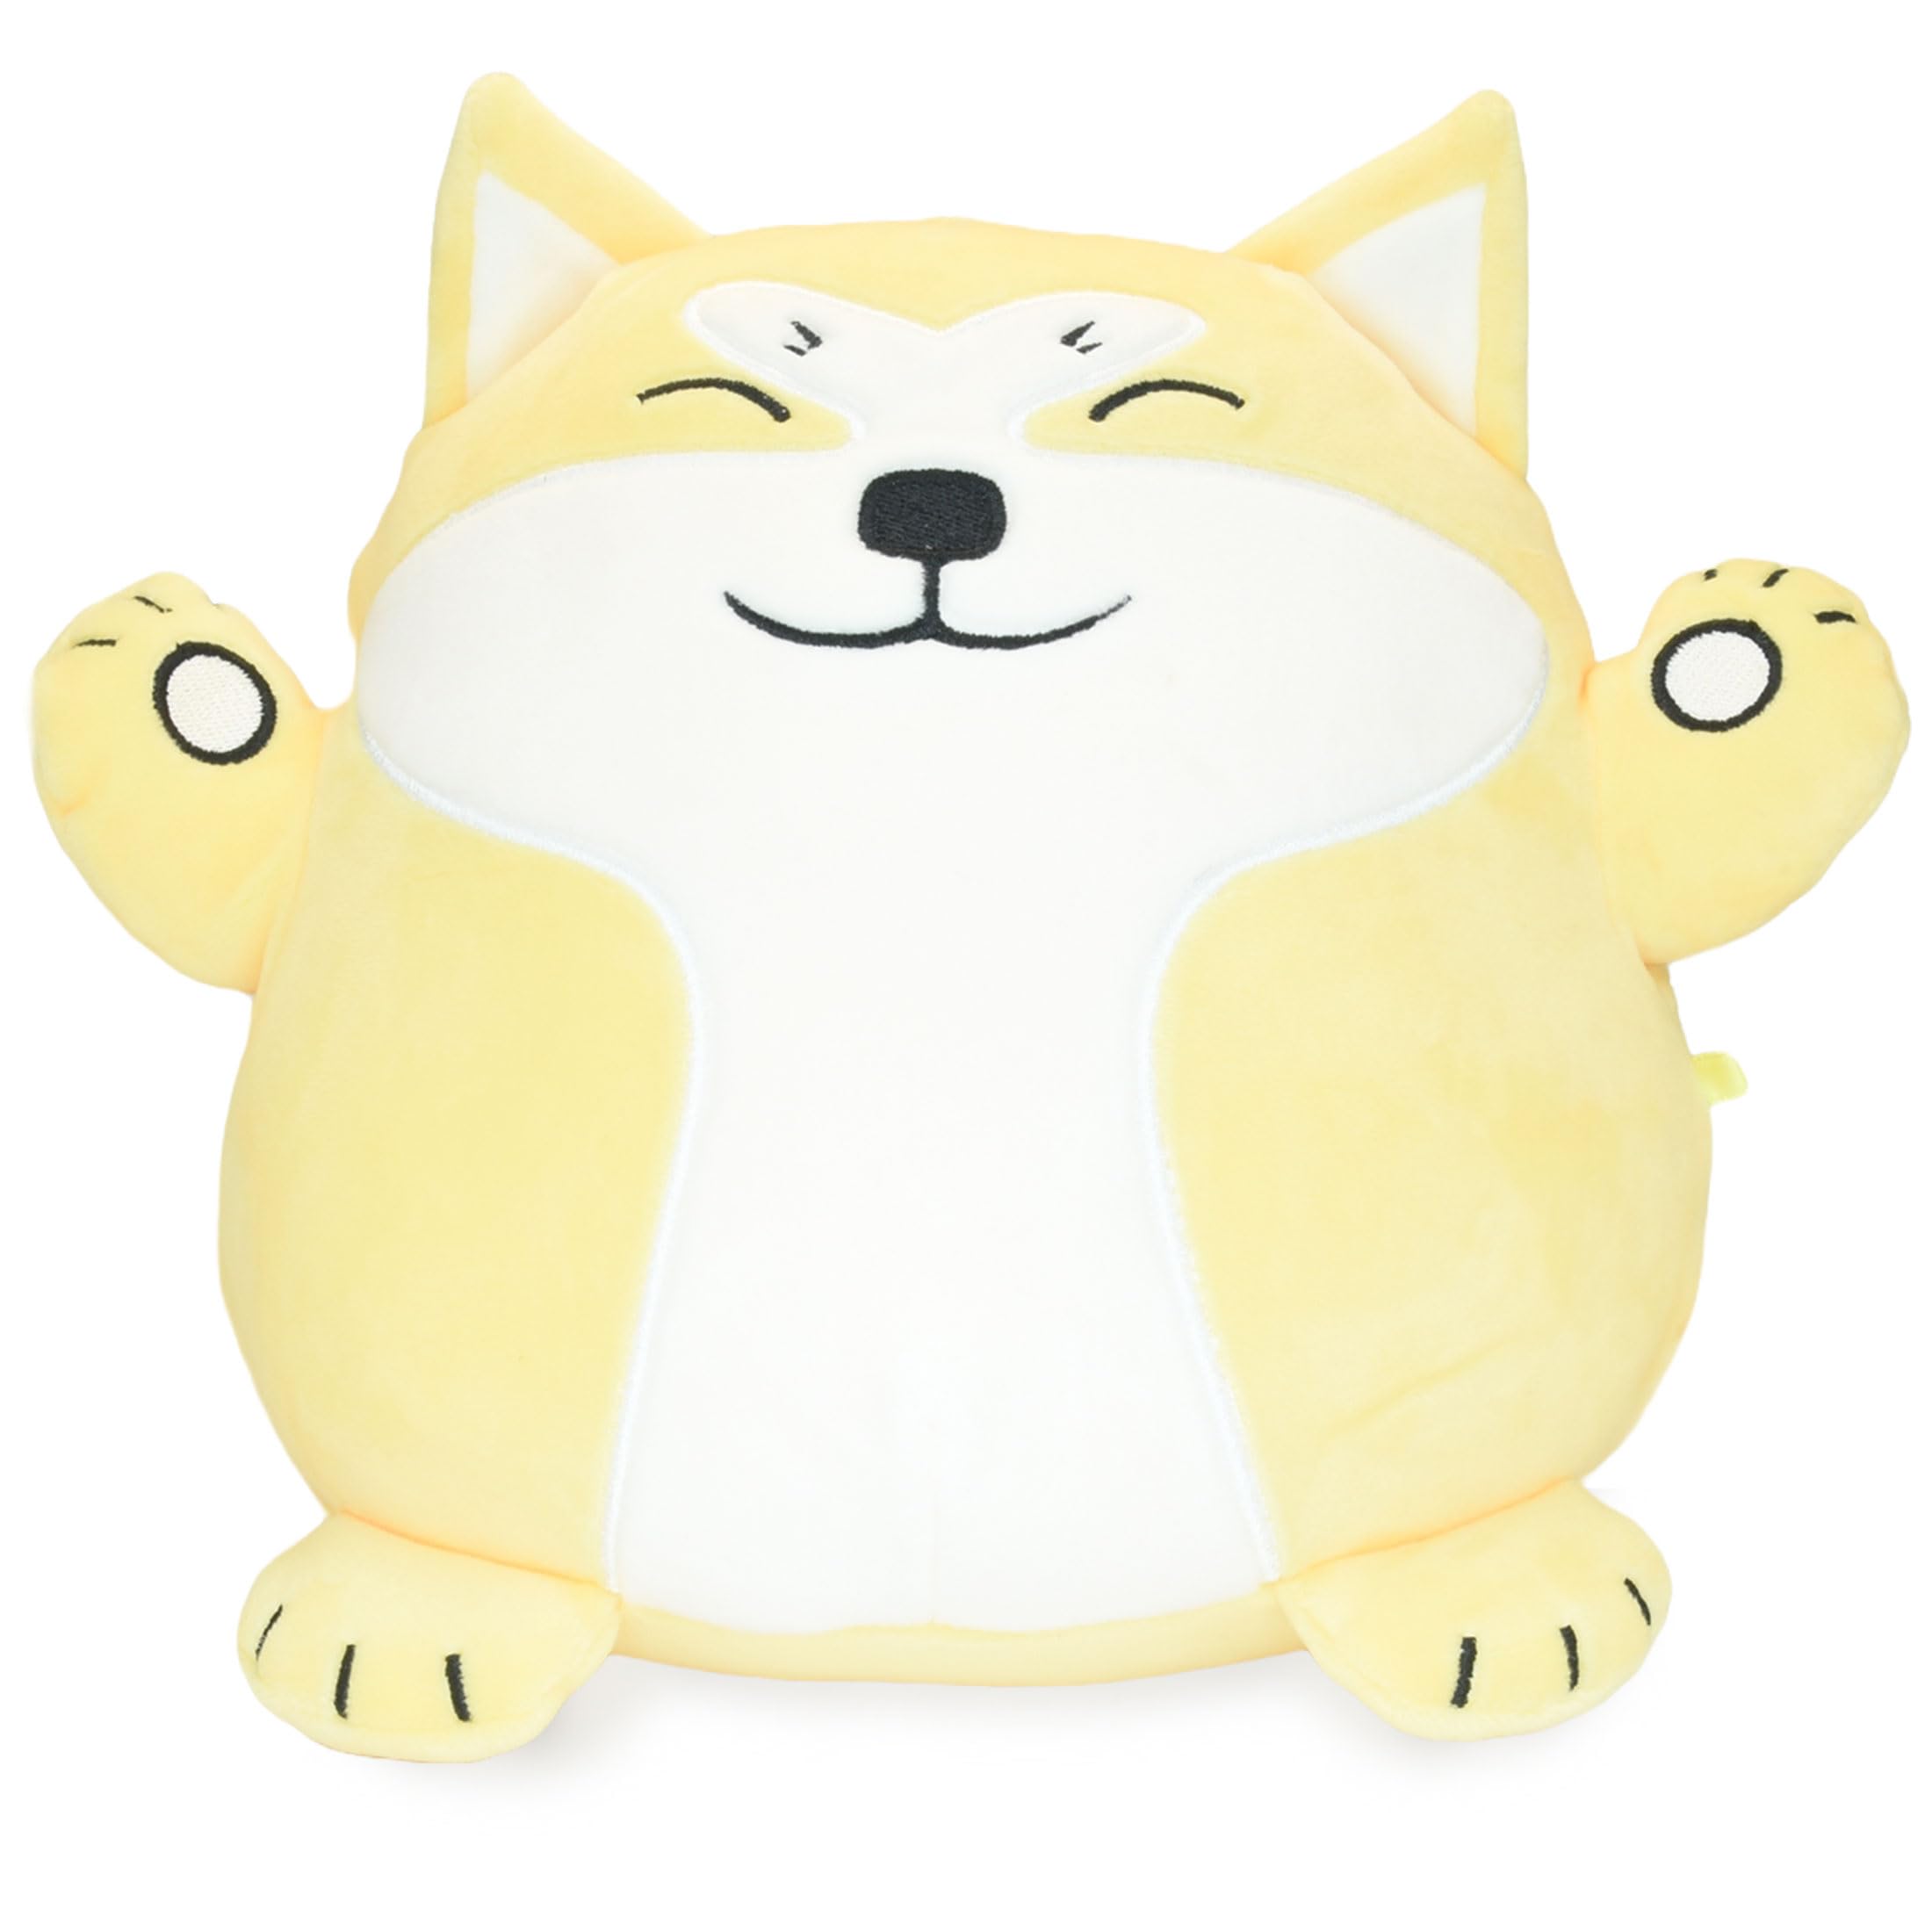 Hachibis Dog Stuffed Animal Plush Toy Akita Shiba Inu Ultra-Soft Squishy Kawaii Plushie Pillow for Kids - Adorable Valentine's Day Gift